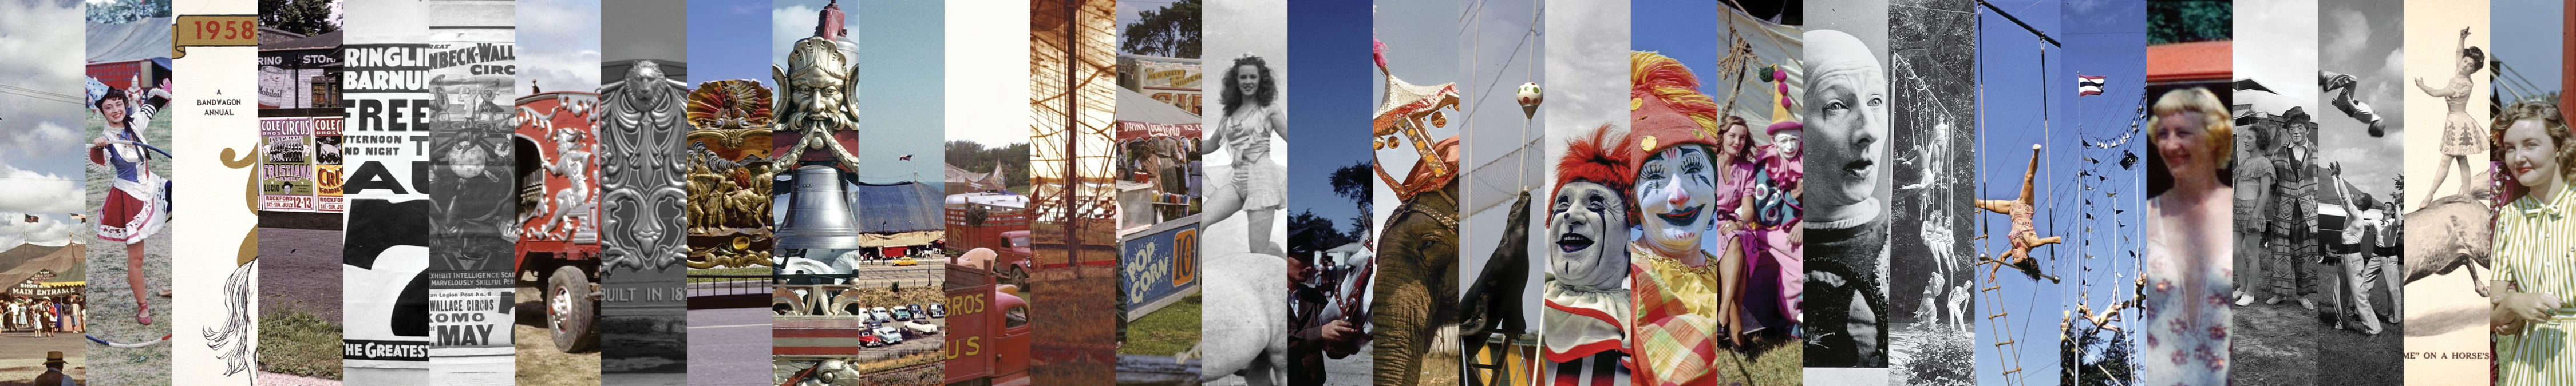 20th Century Circuses in Illinois Exhibit Banner Image